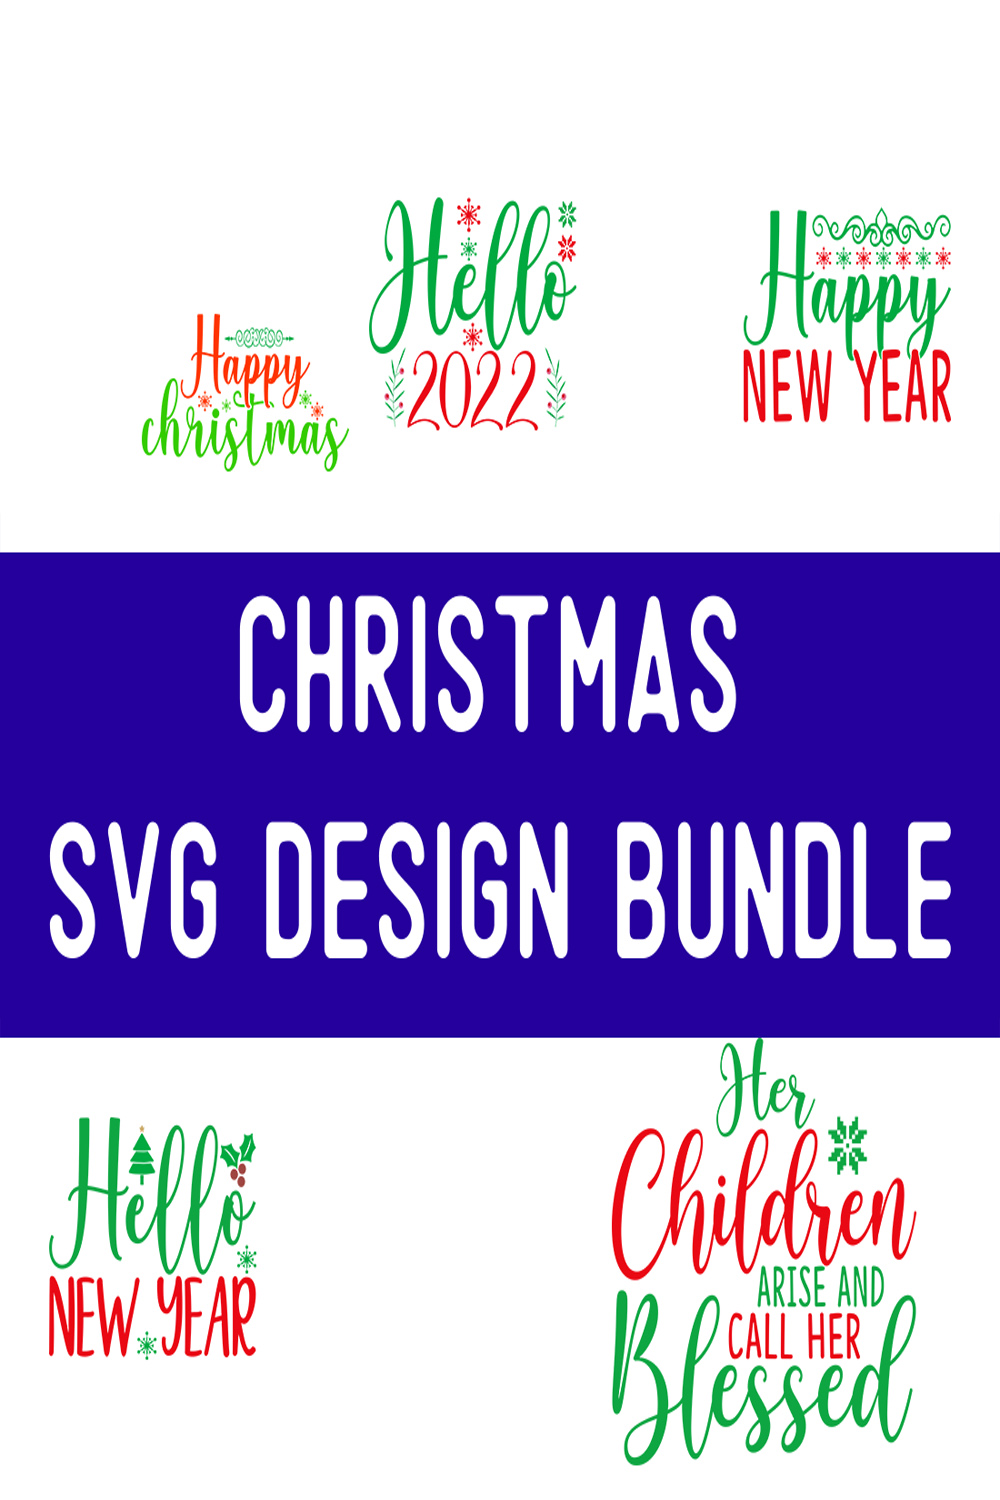 Christmas SVG Design Bundle pinterest preview image.